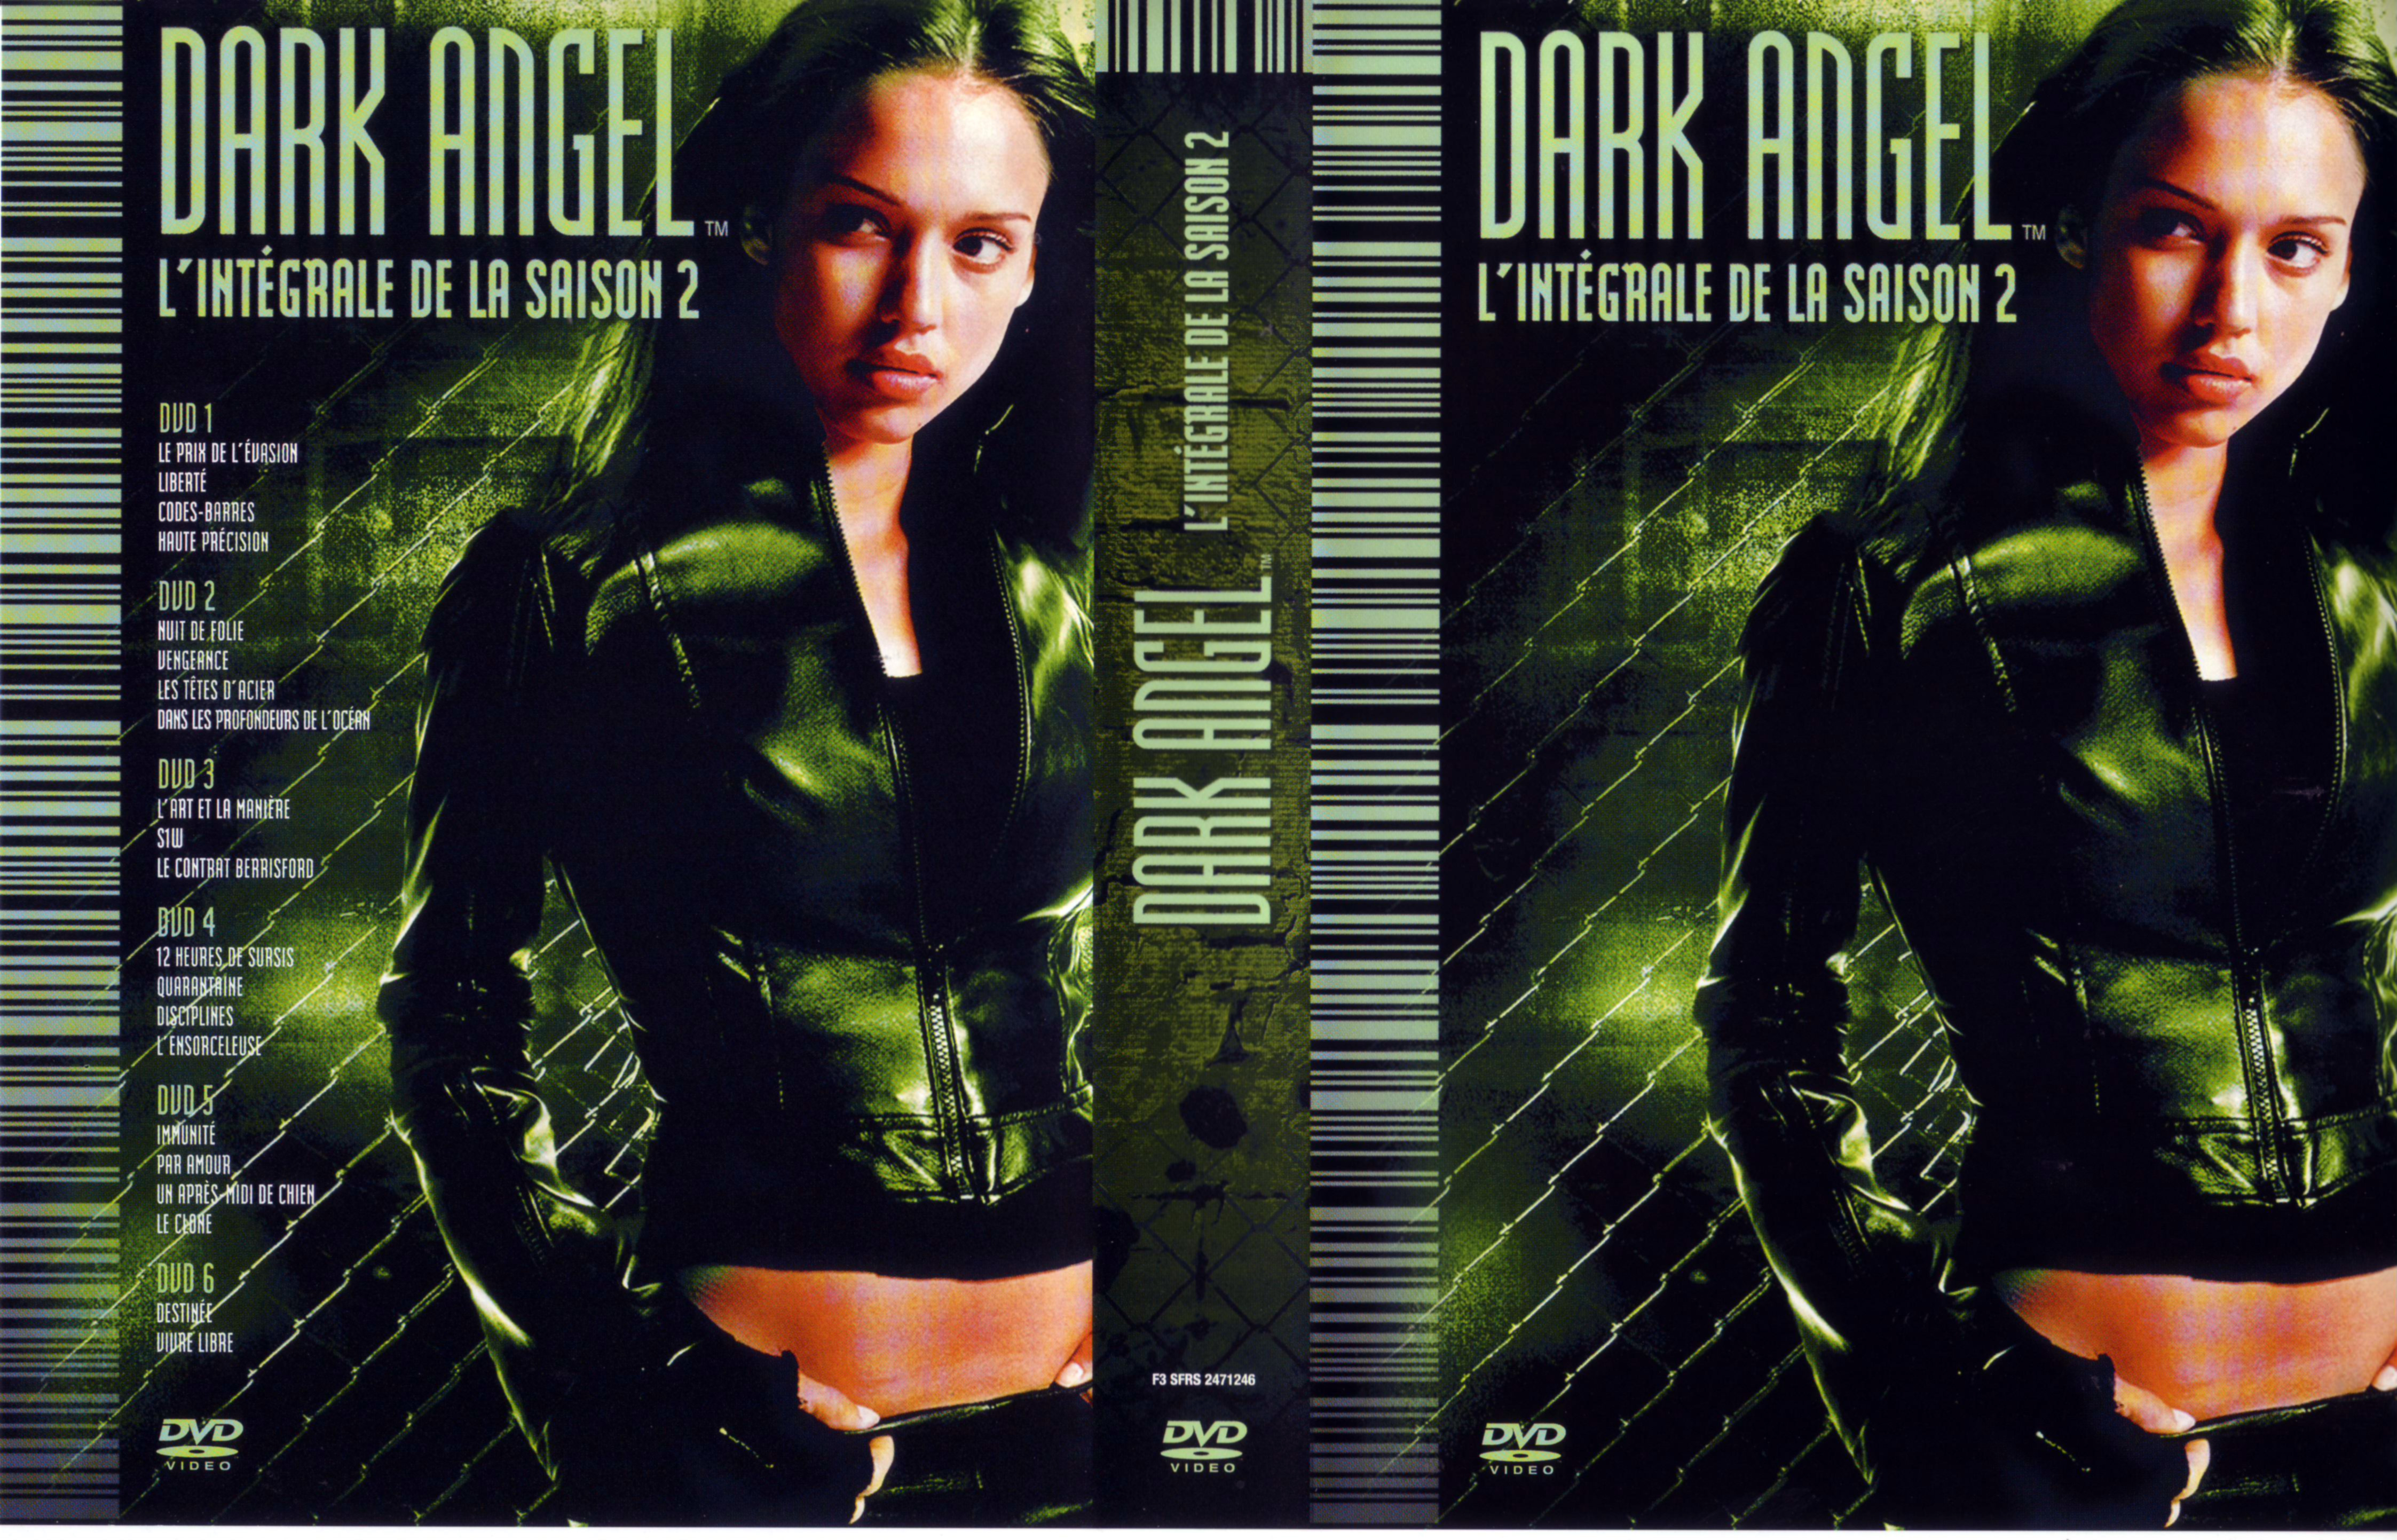 Jaquette DVD Dark Angel Saison 2 COFFRET